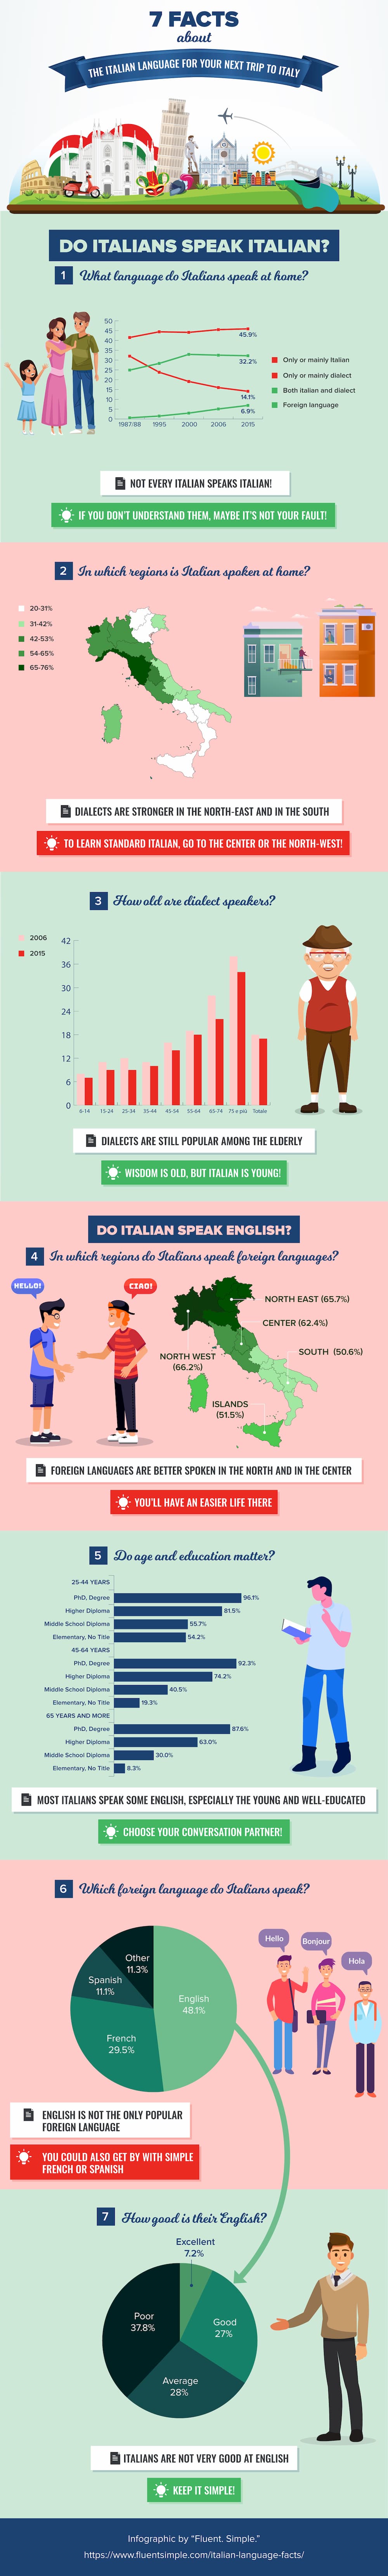 Italian language facts